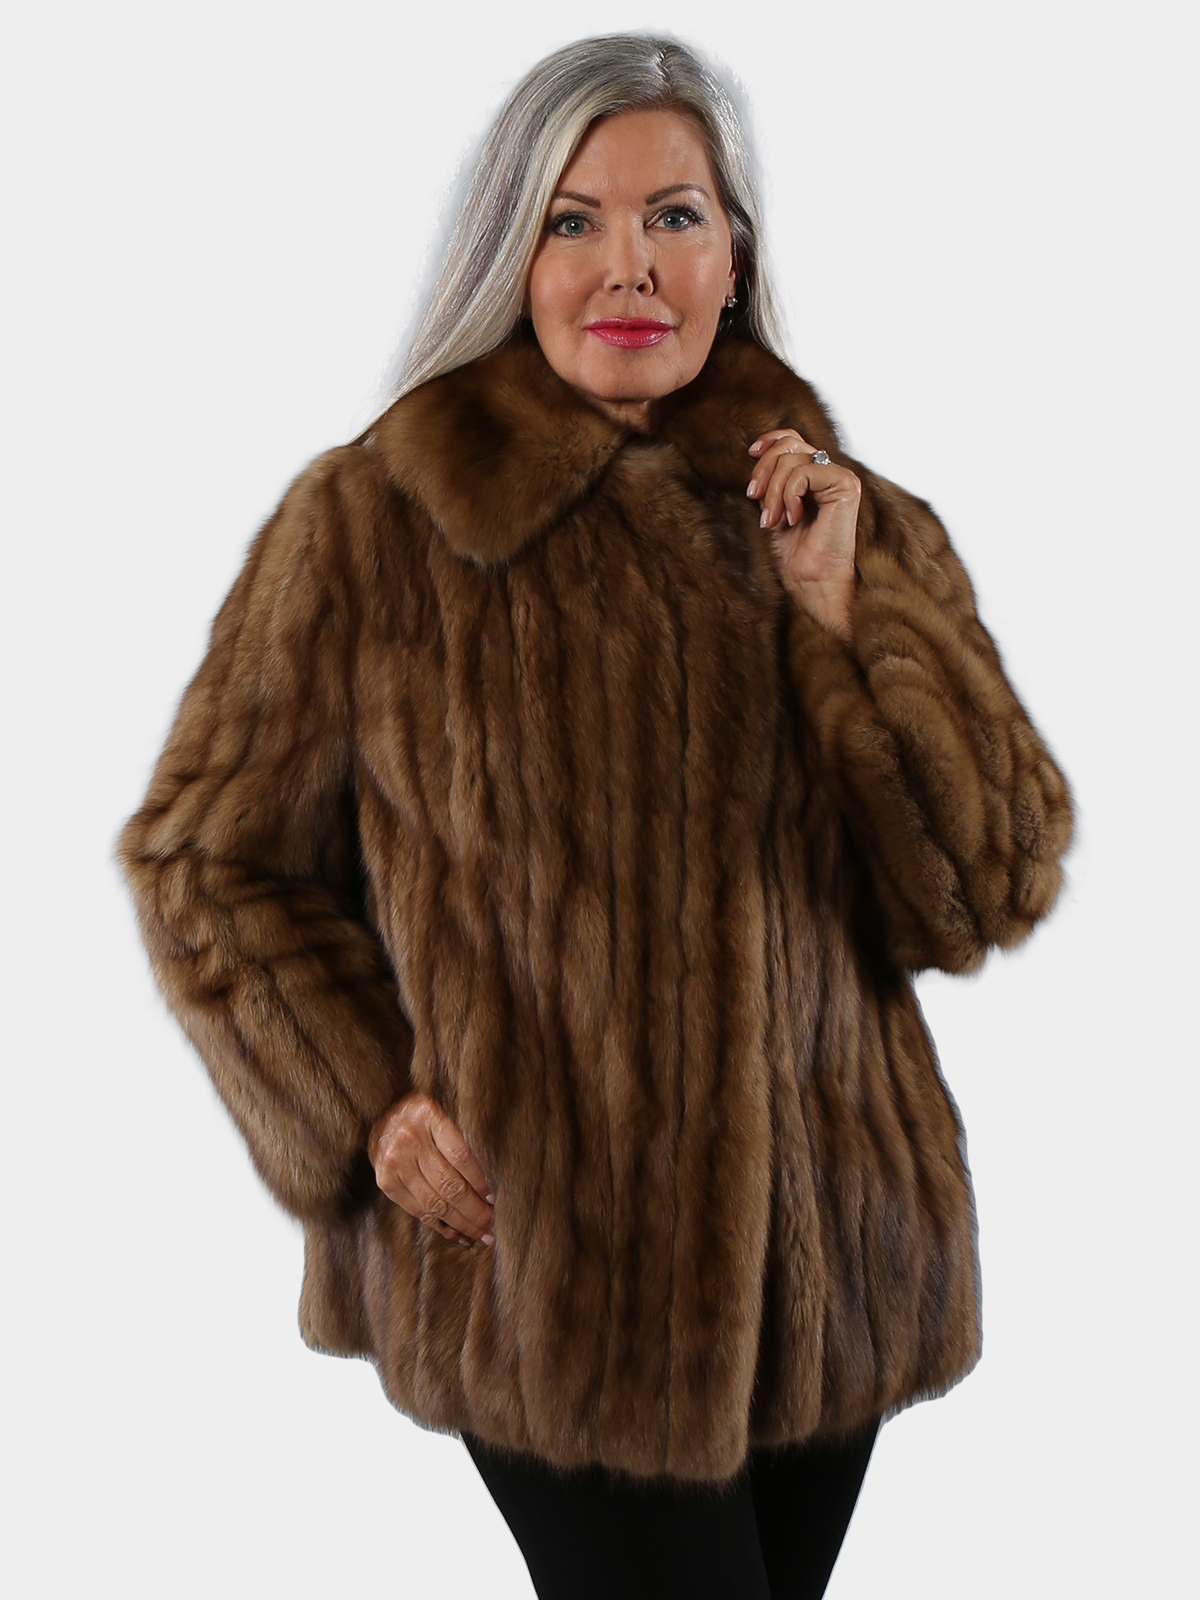 Sable Fur Jacket (Women's Large) - Estate Furs